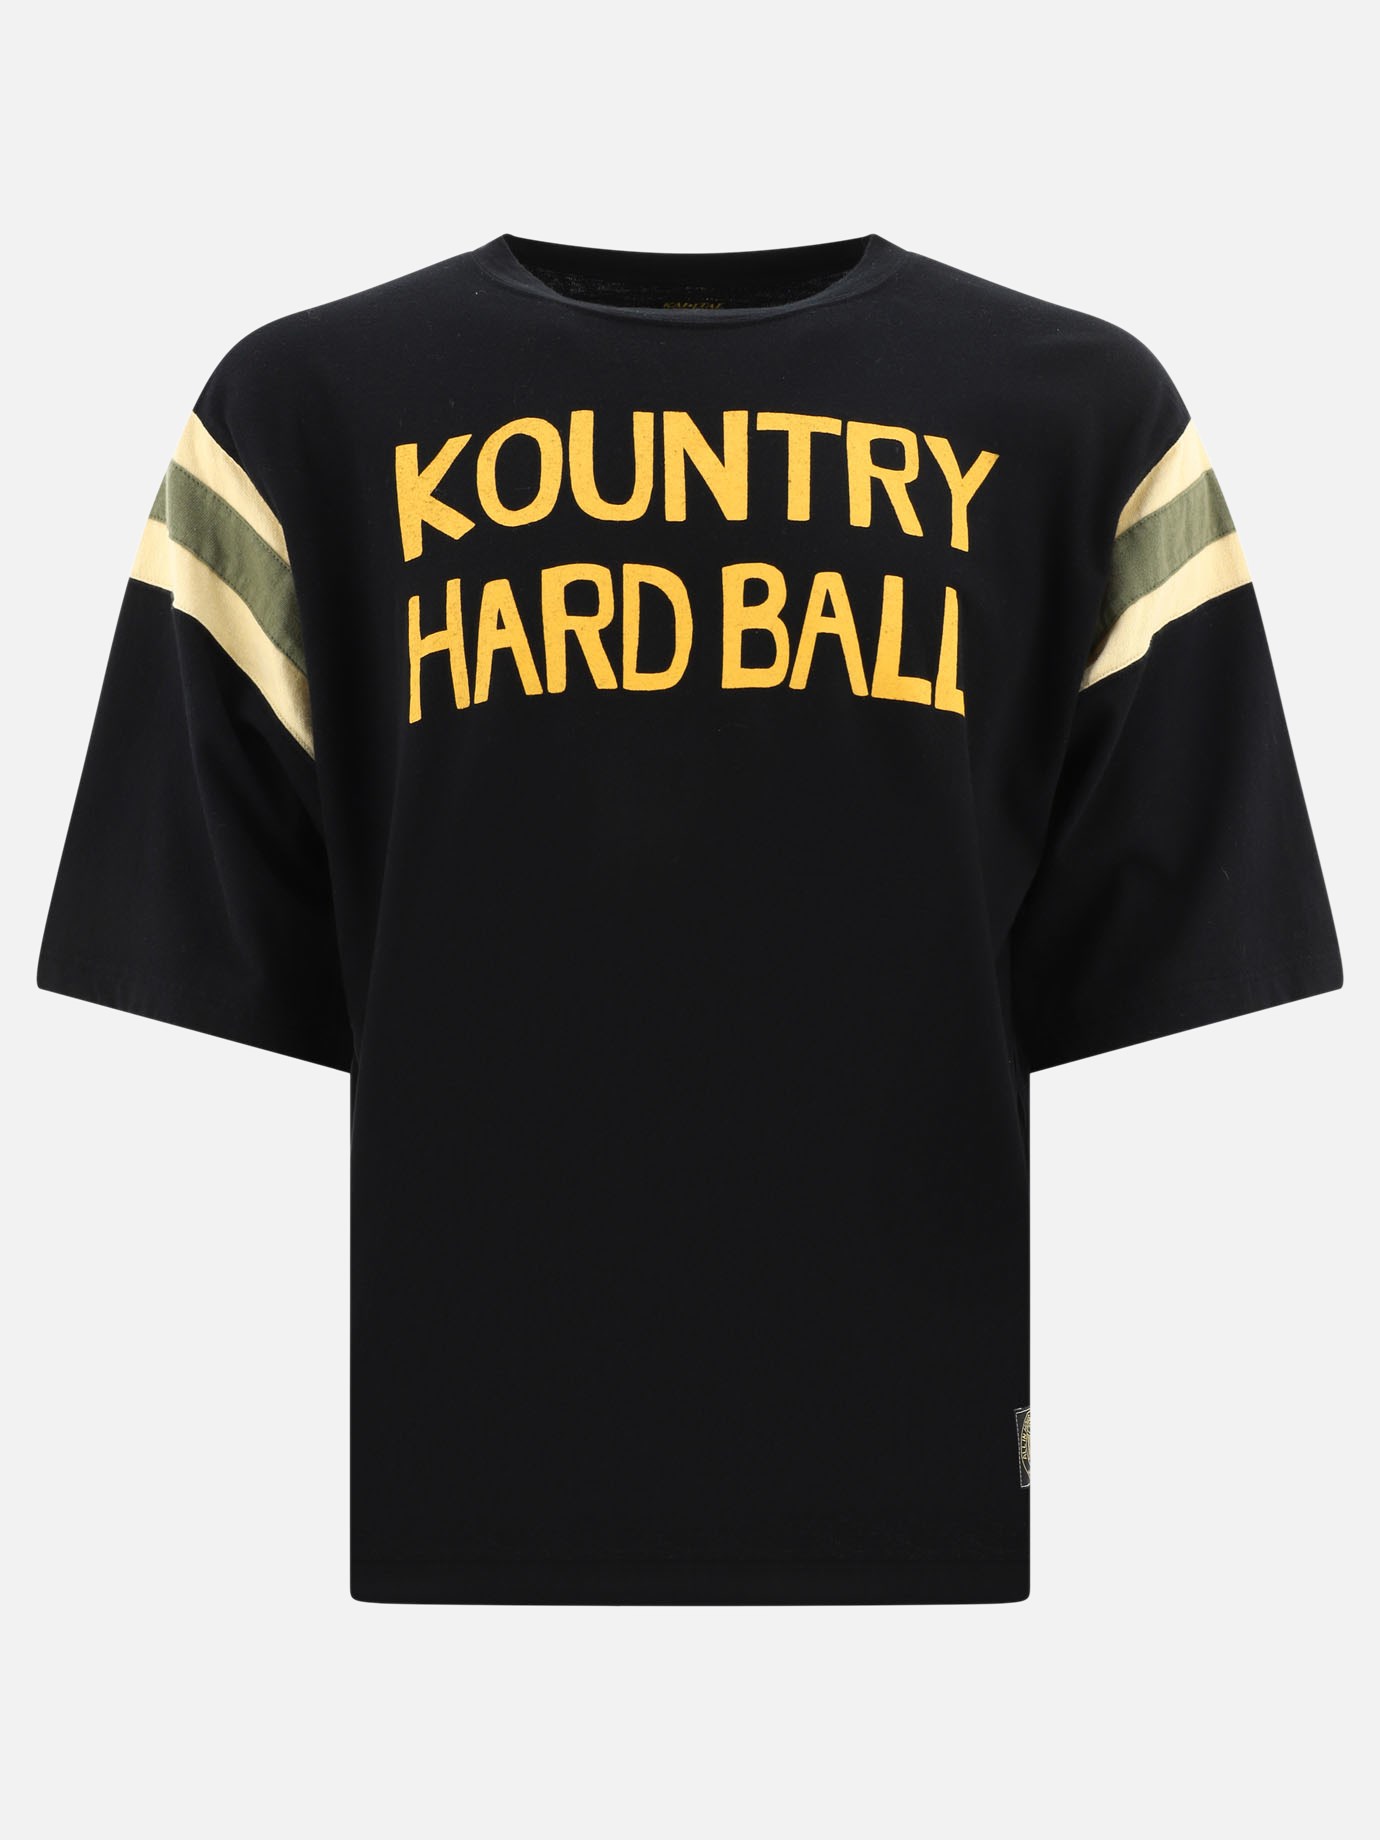  Kountry Hardball t-shirtby Kapital - 1